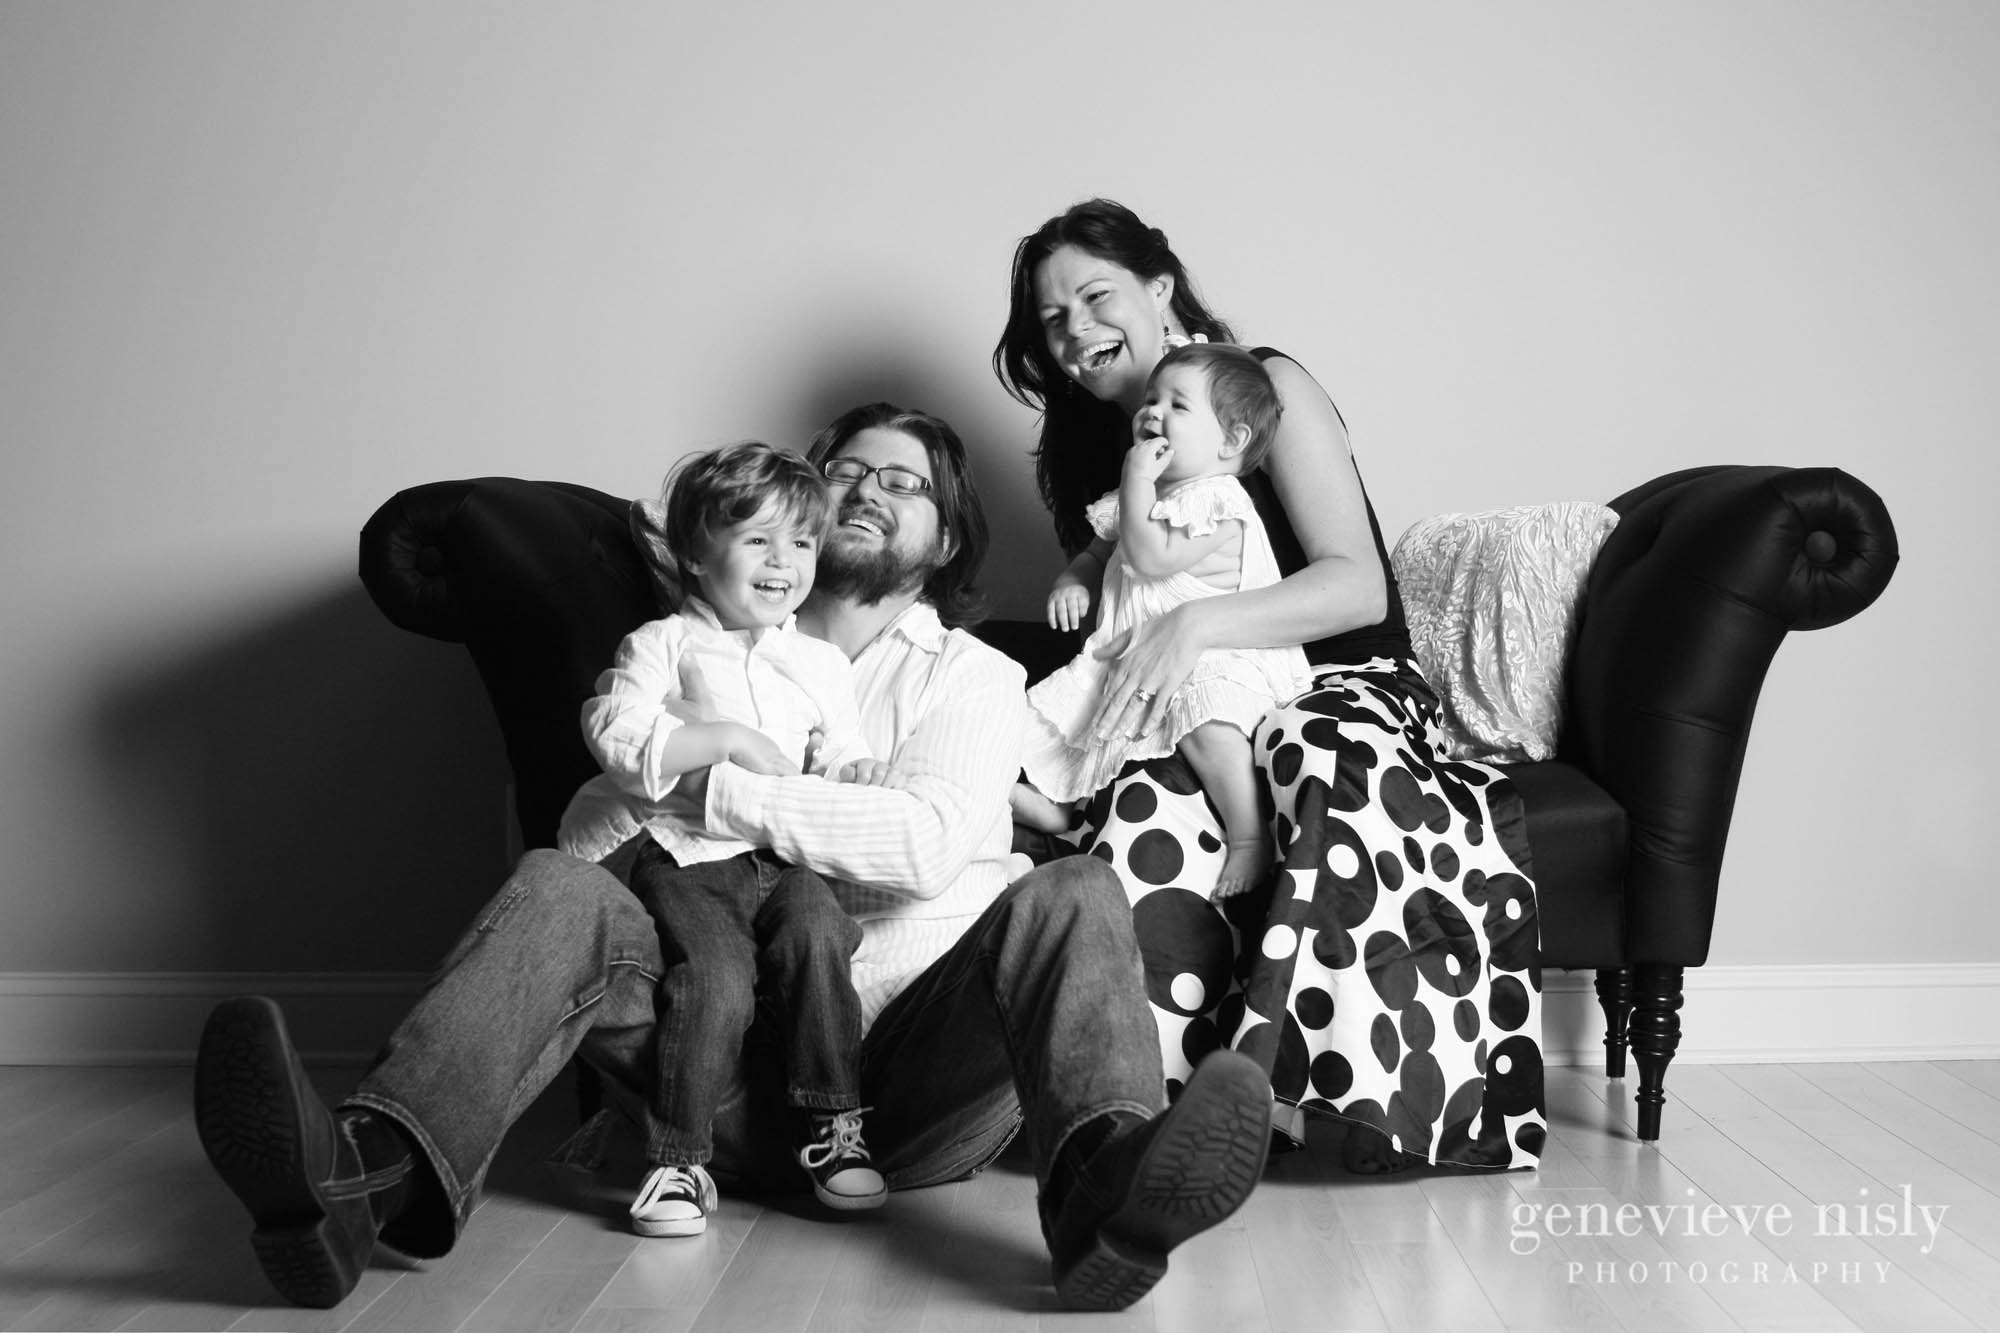  Copyright Genevieve Nisly Photography, Family, Green, Kids, Ohio, Portraits